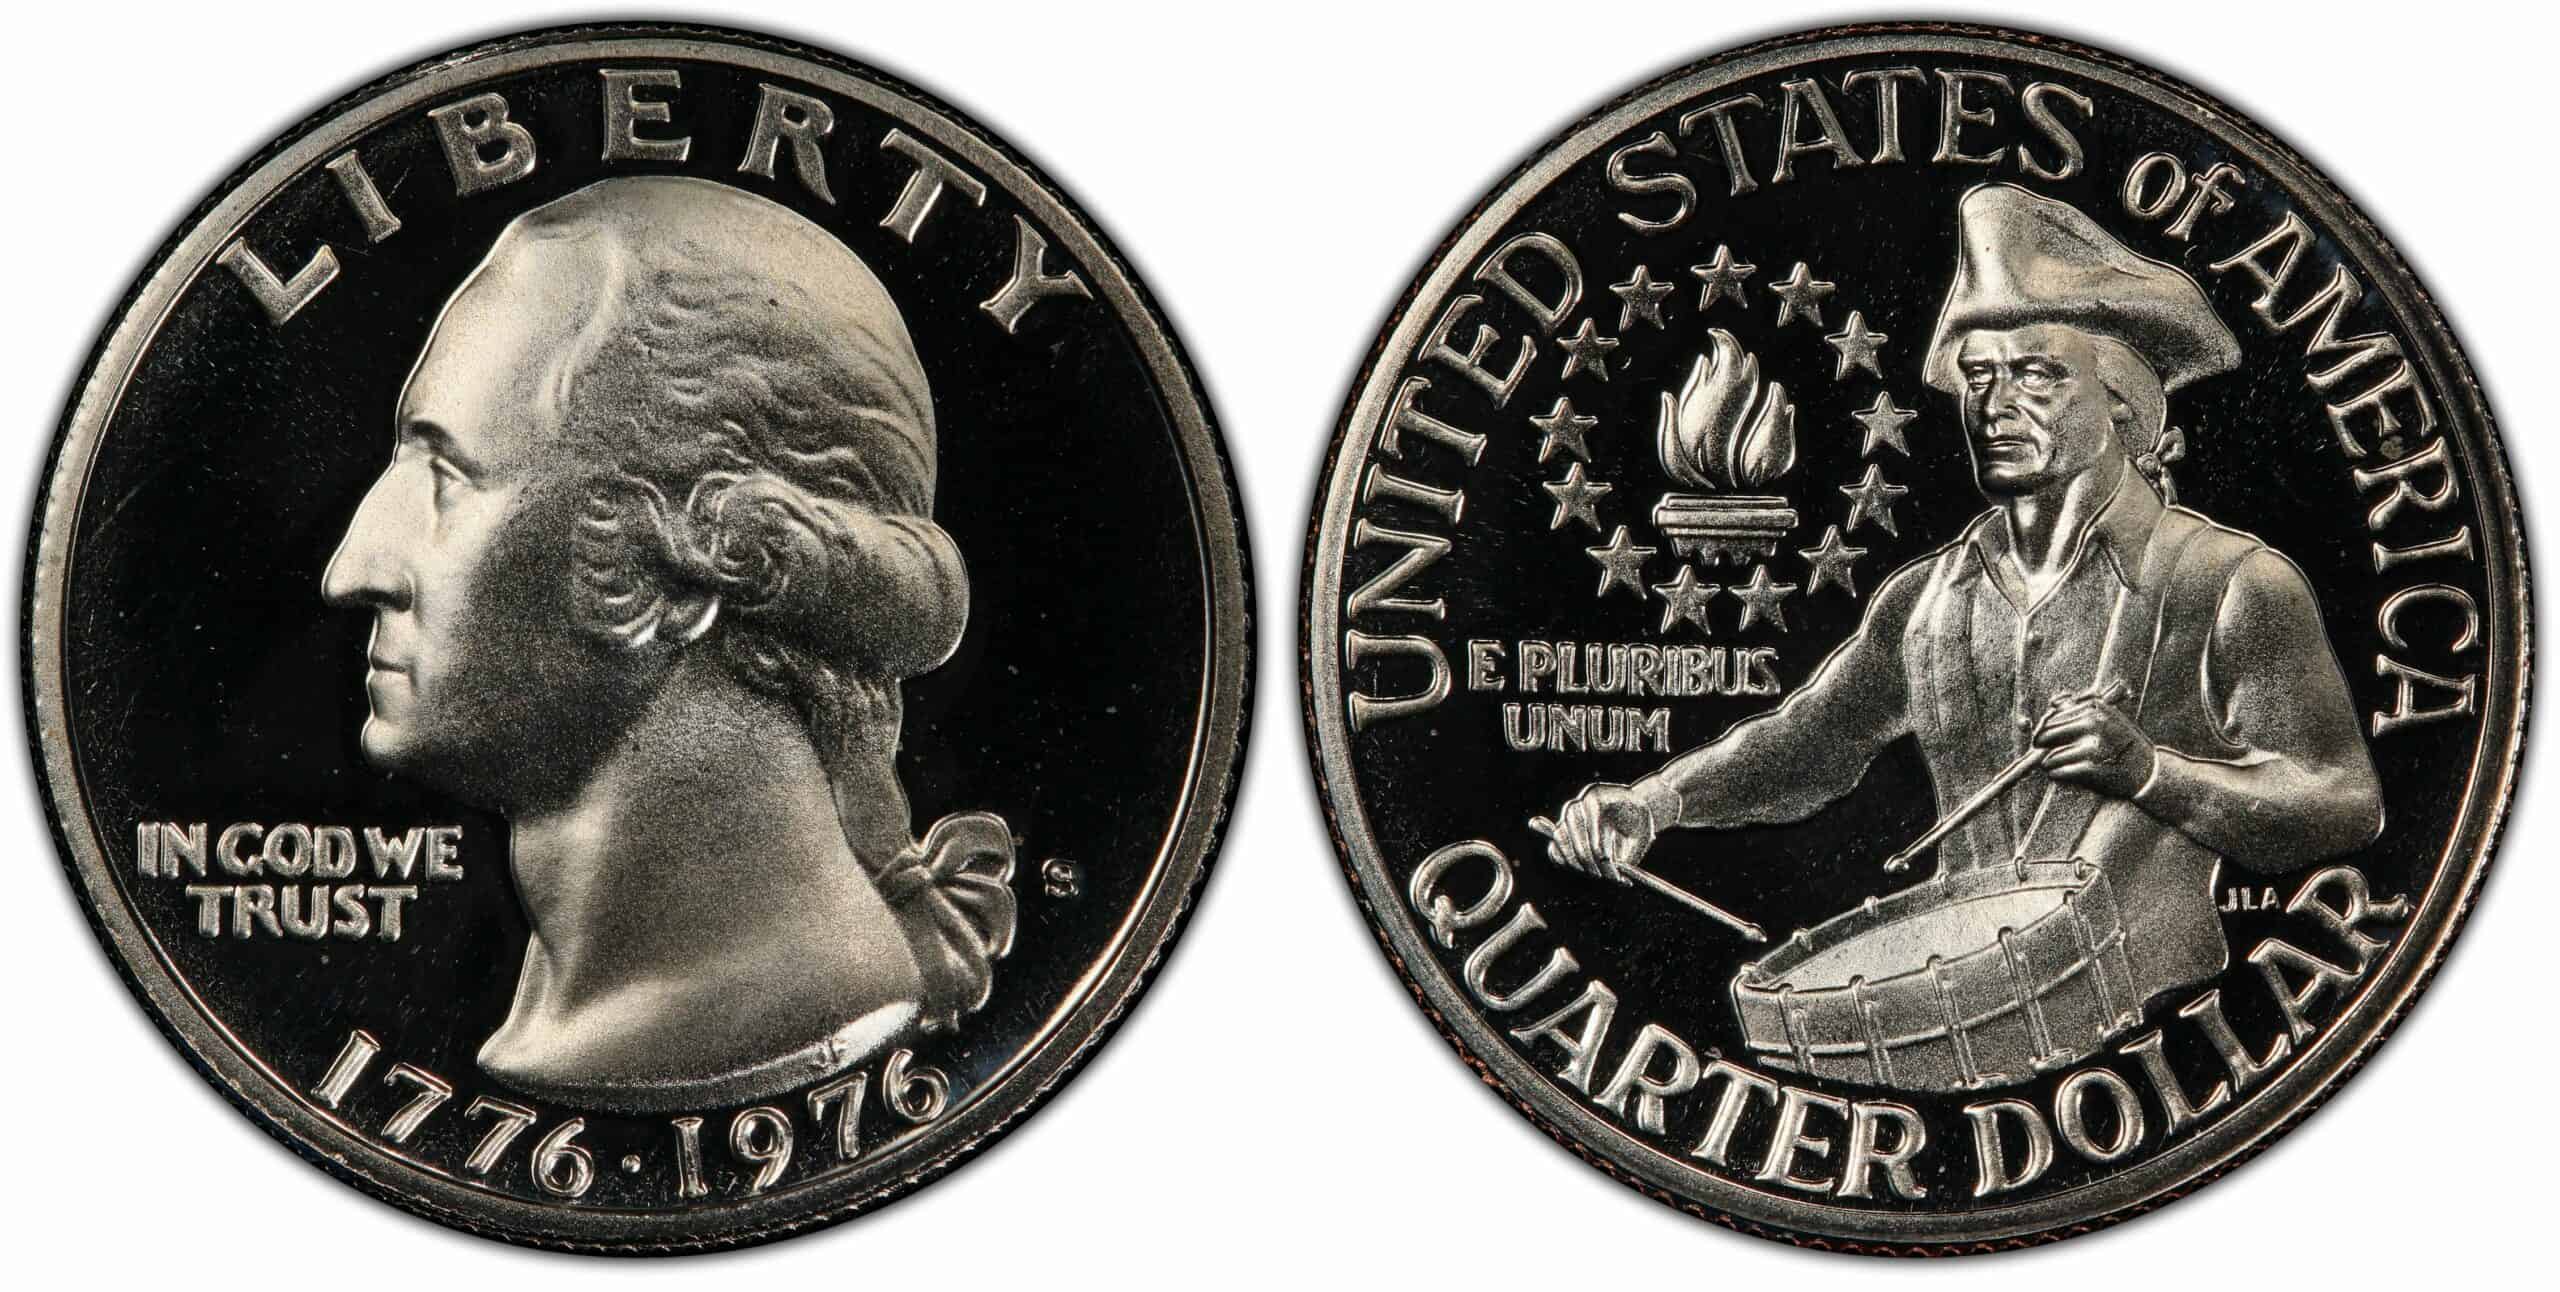 1776-1976 S proof copper-nickel clad Washington quarter